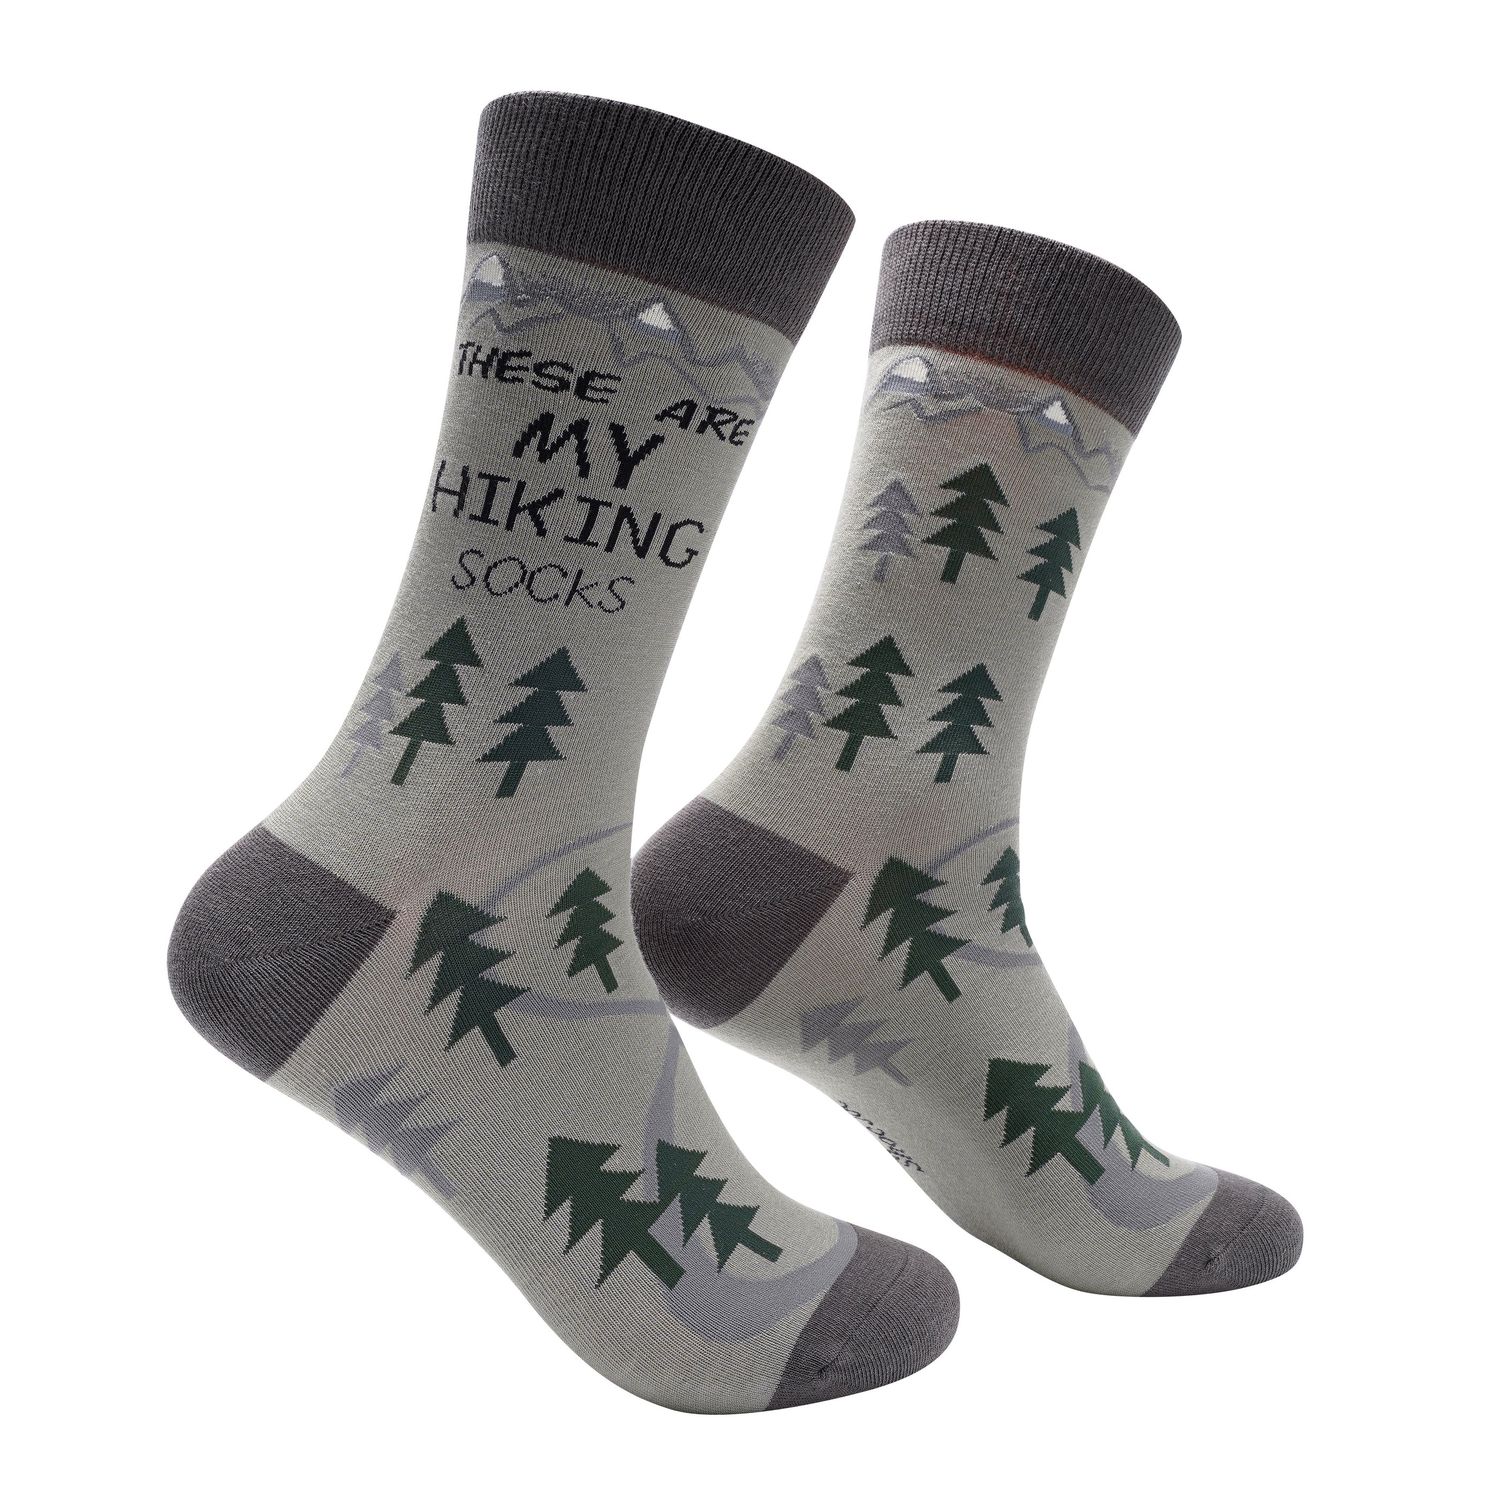 These Are My Hiking Socks | L adult size | Shoc Joc